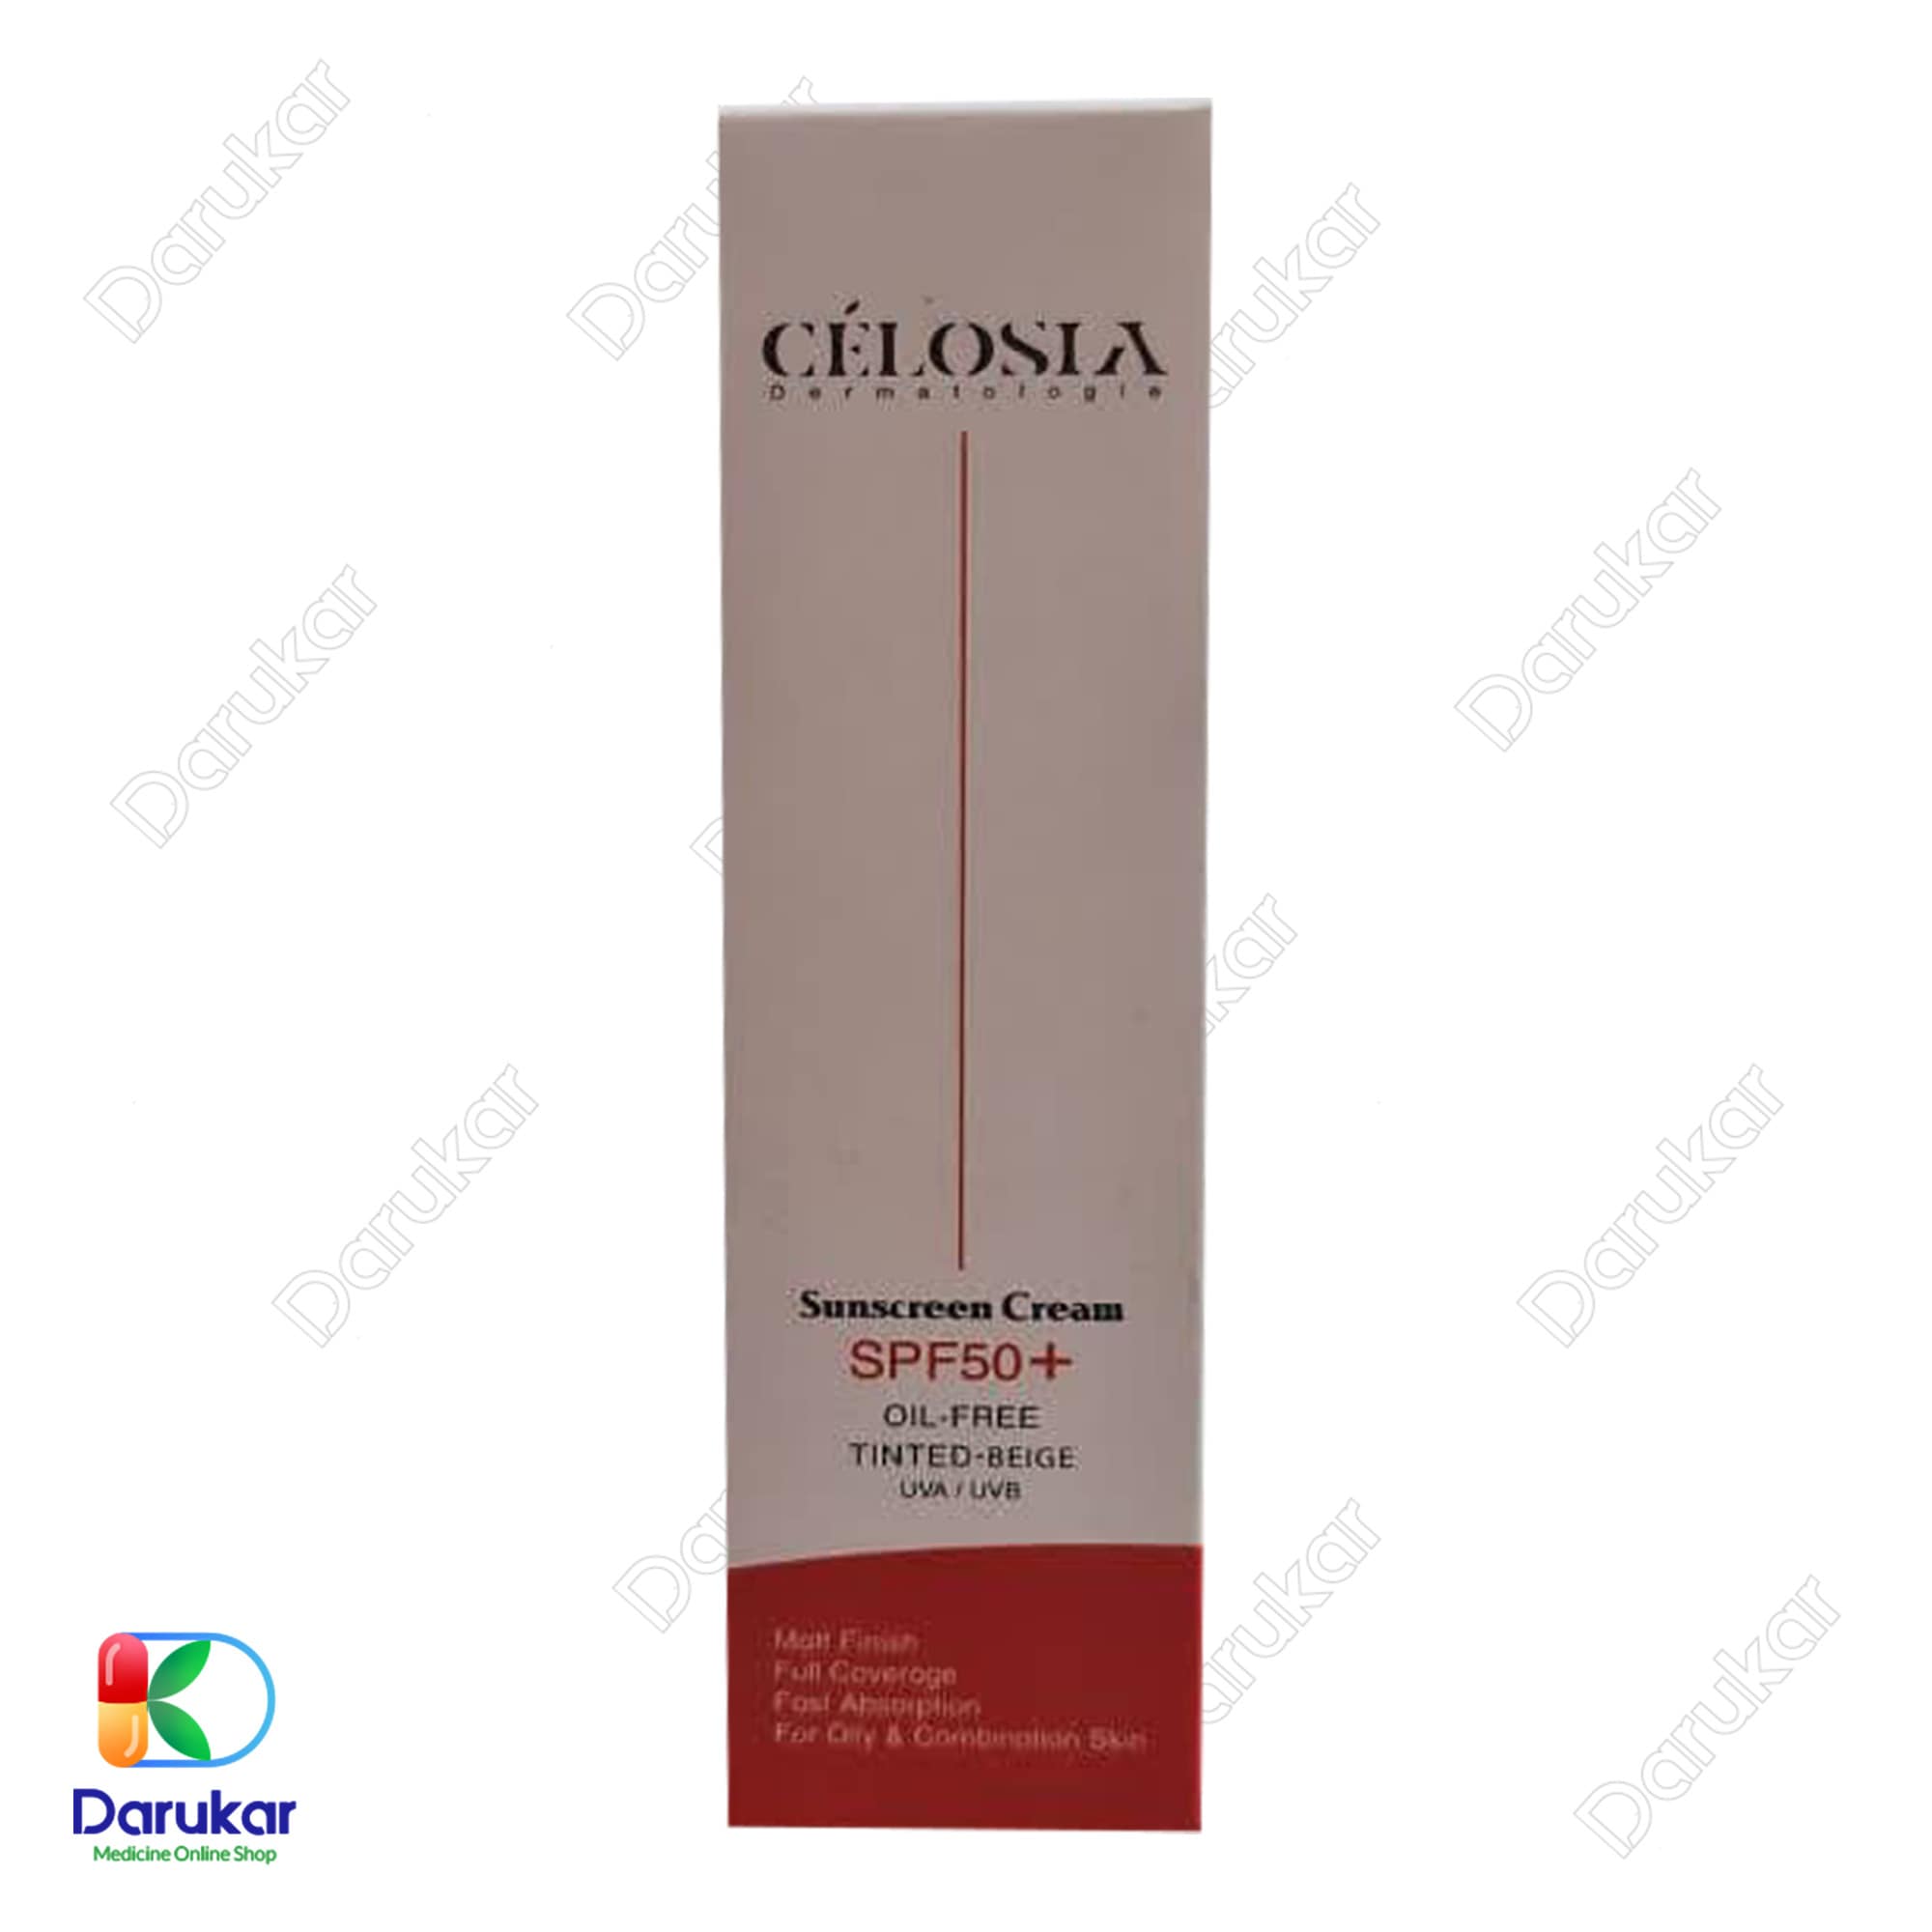 Celosia oil free tinted sunscreen SPF50 2